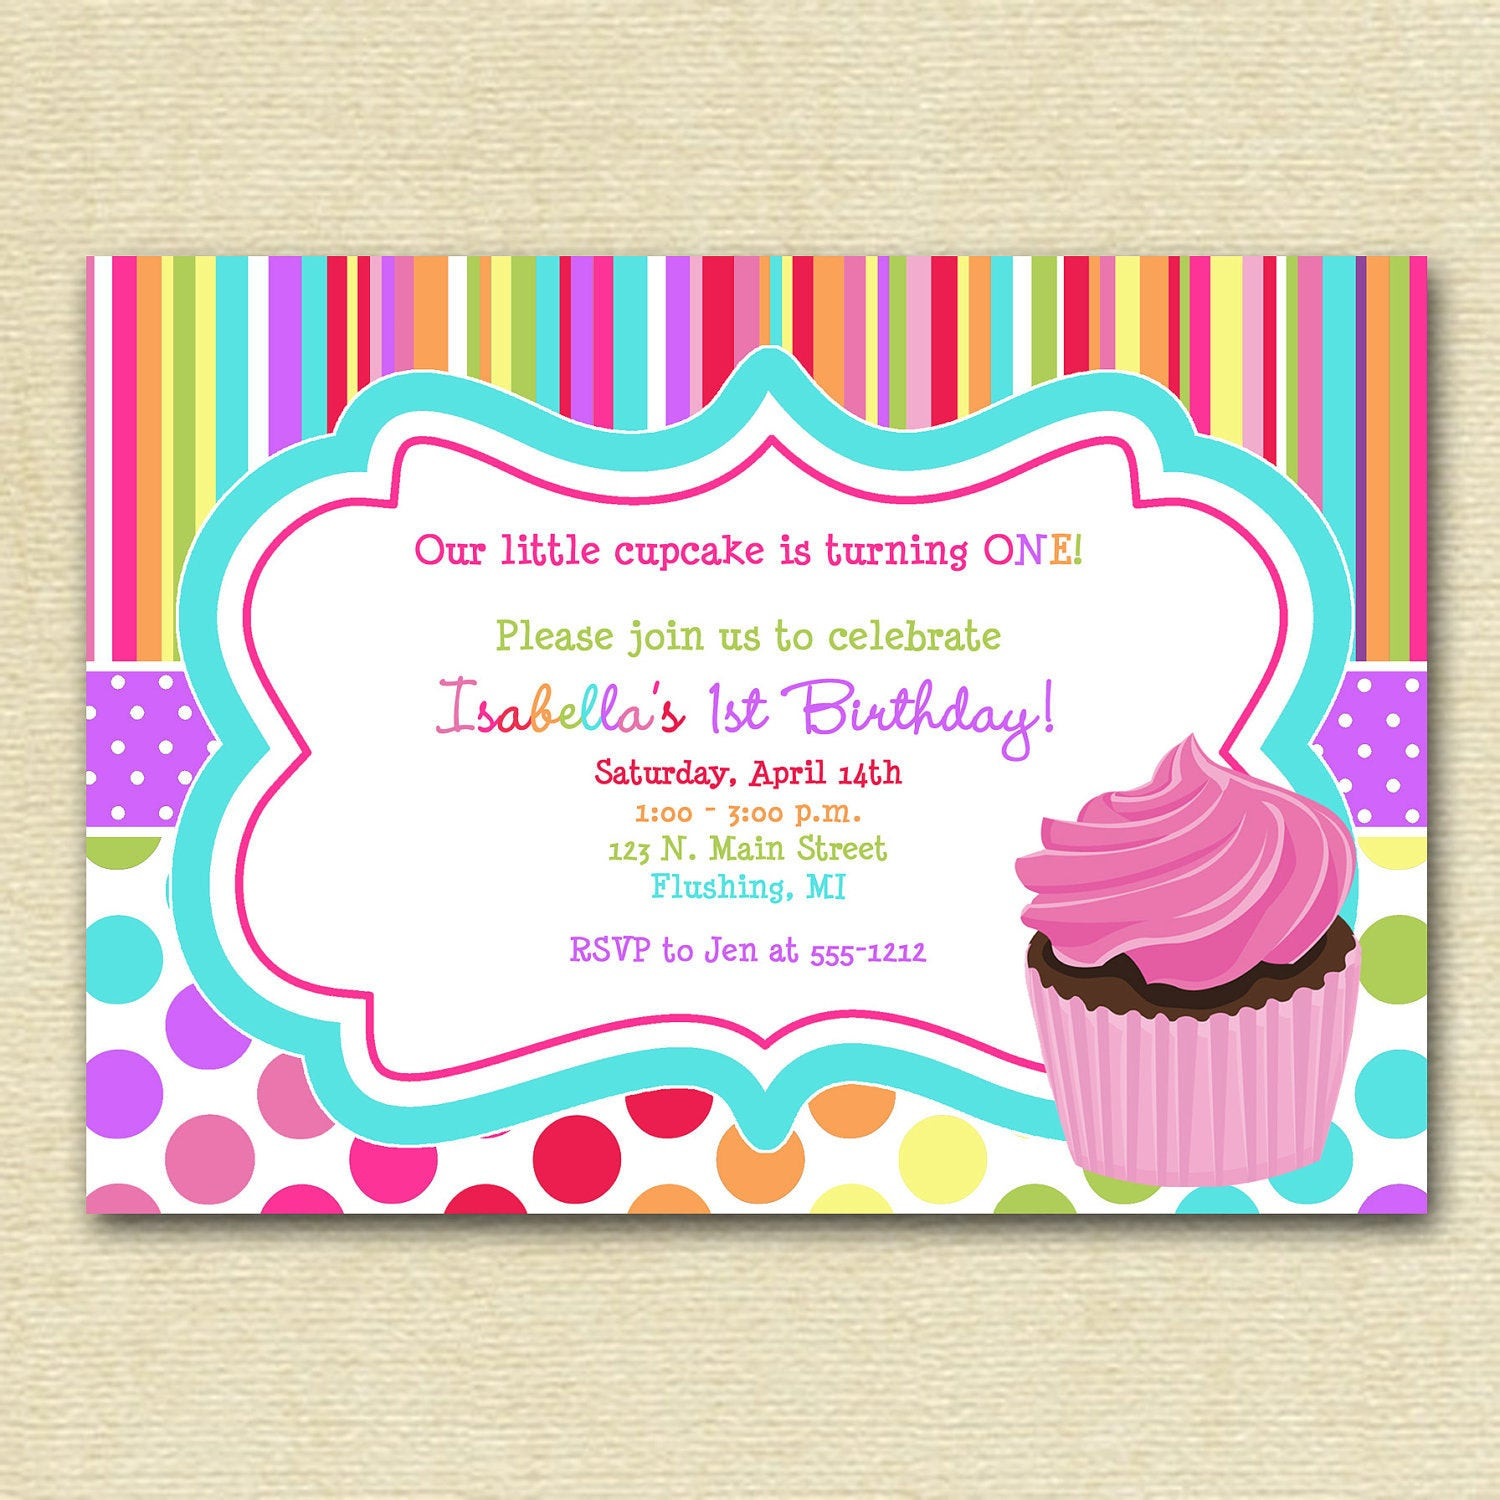 Cupcake Birthday Invitations
 Cupcake Birthday Party Invitation Cupcake Invitation